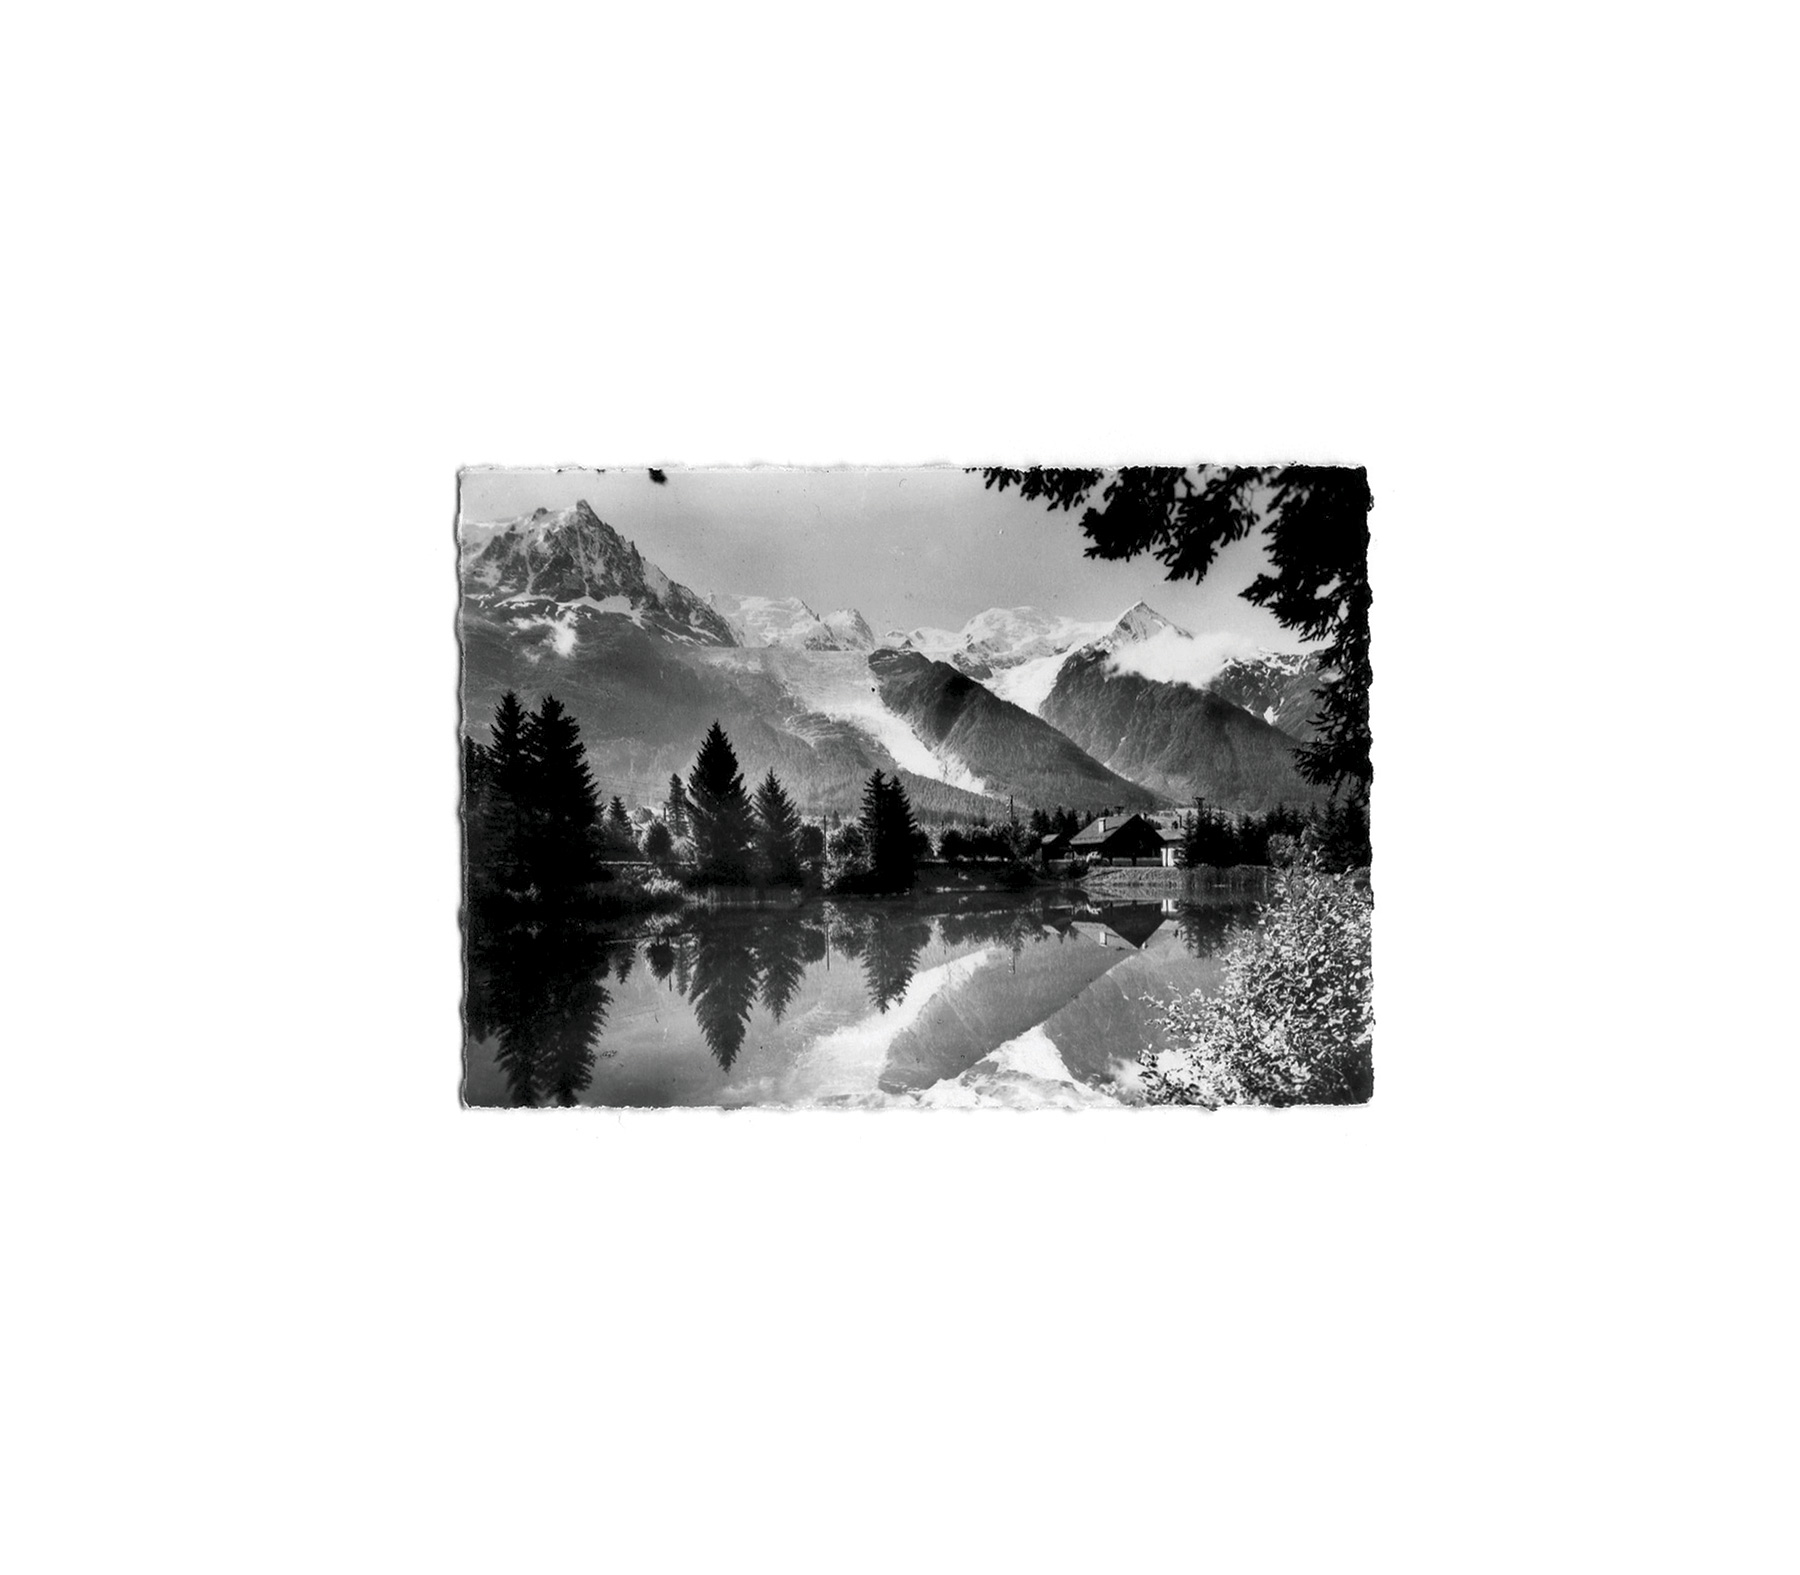    Chamonix Mont-Blanc (lac des Gaillands)  &nbsp;2009&nbsp;  found postcard&nbsp; 6 x 9 cm 